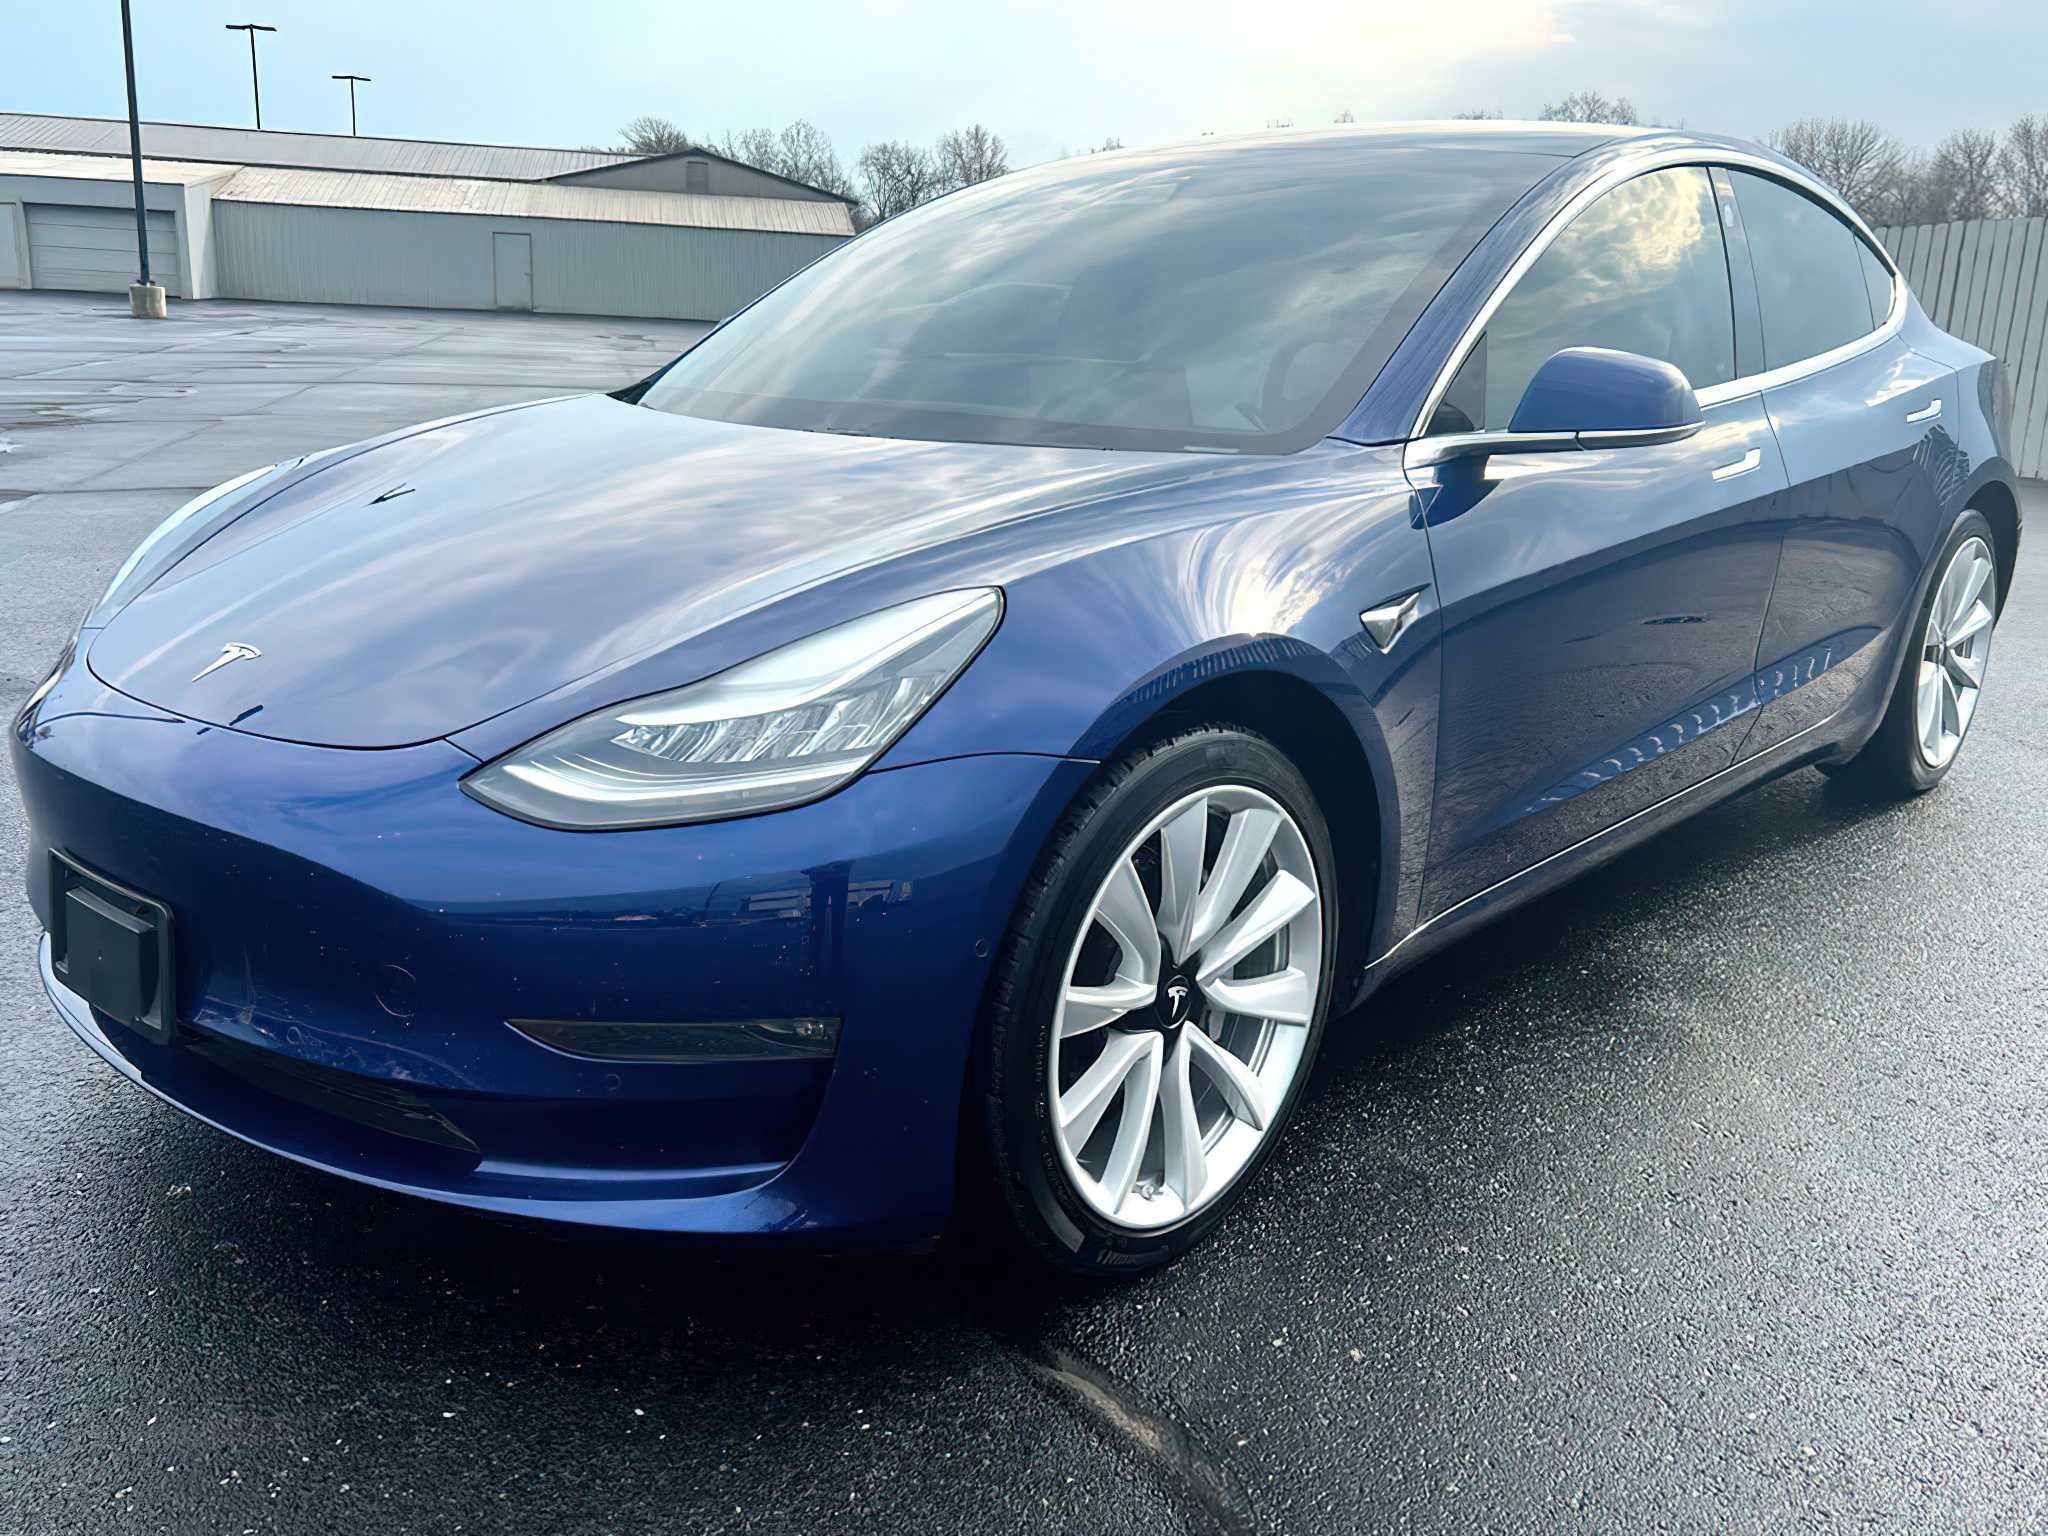 Tesla Model 3  2019